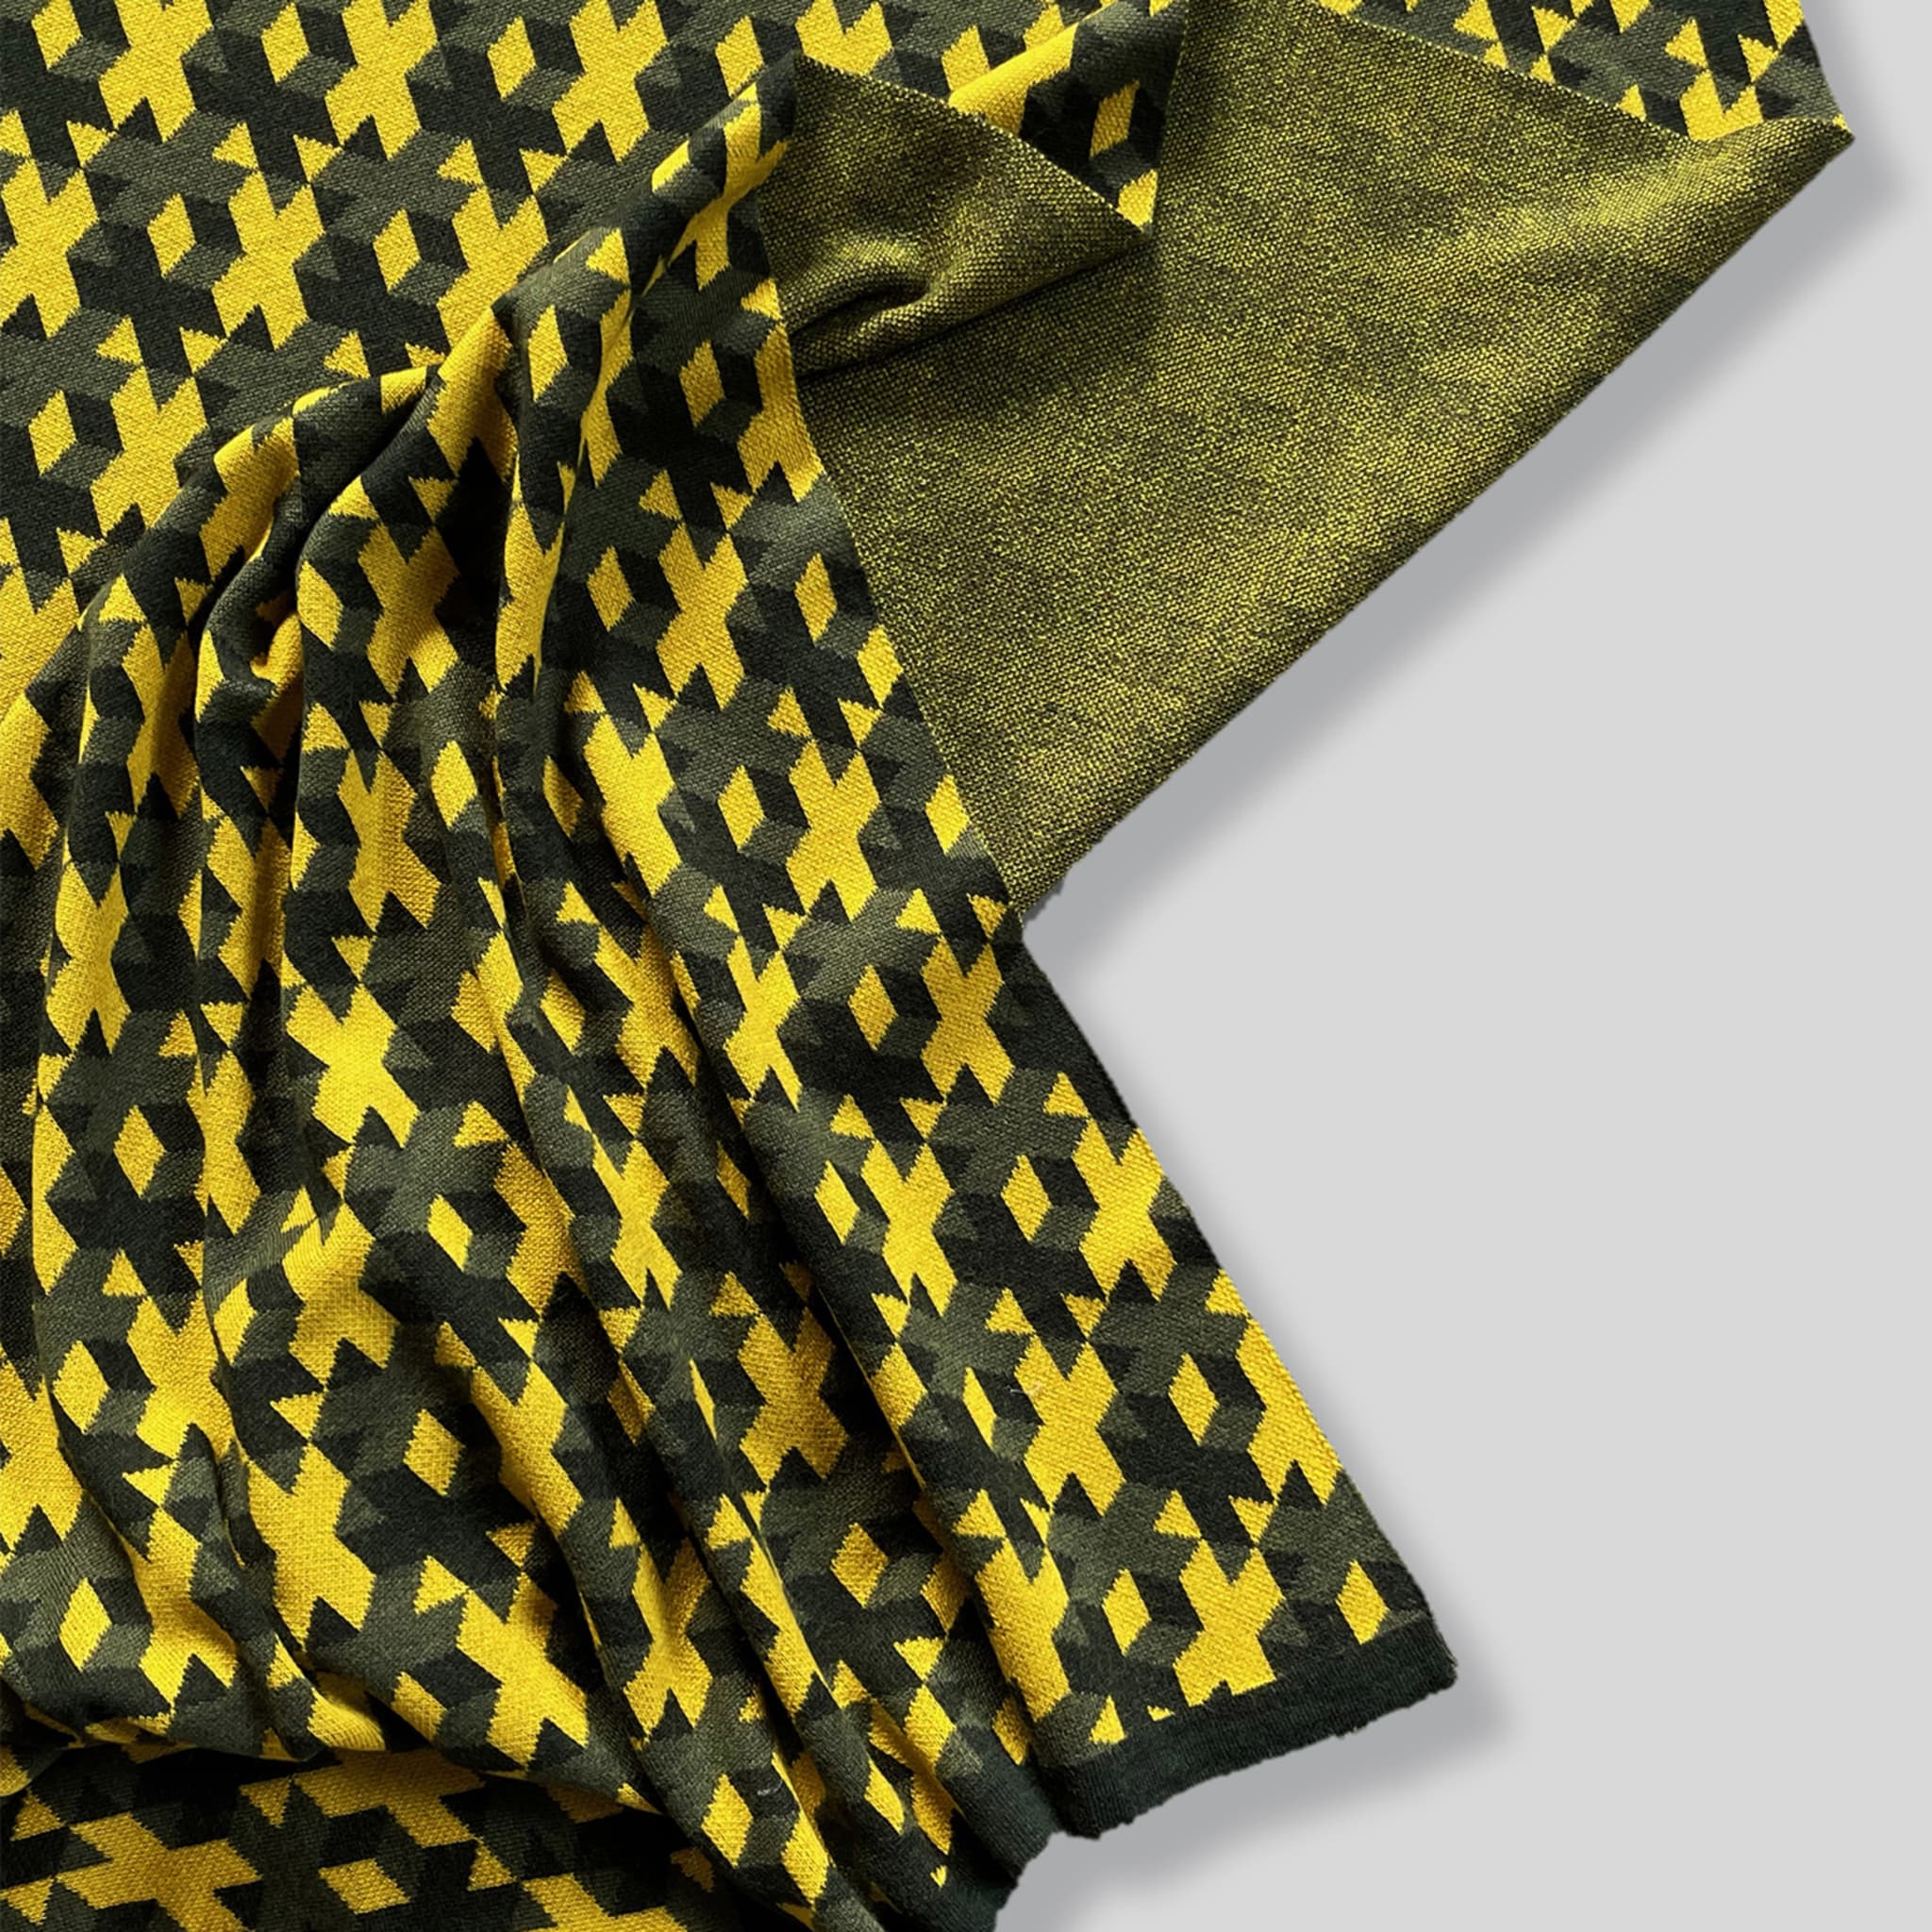 Plaid Lana 01 Patterned Yellow & Gray Blanket by Giulio Iacchetti - Alternative view 1